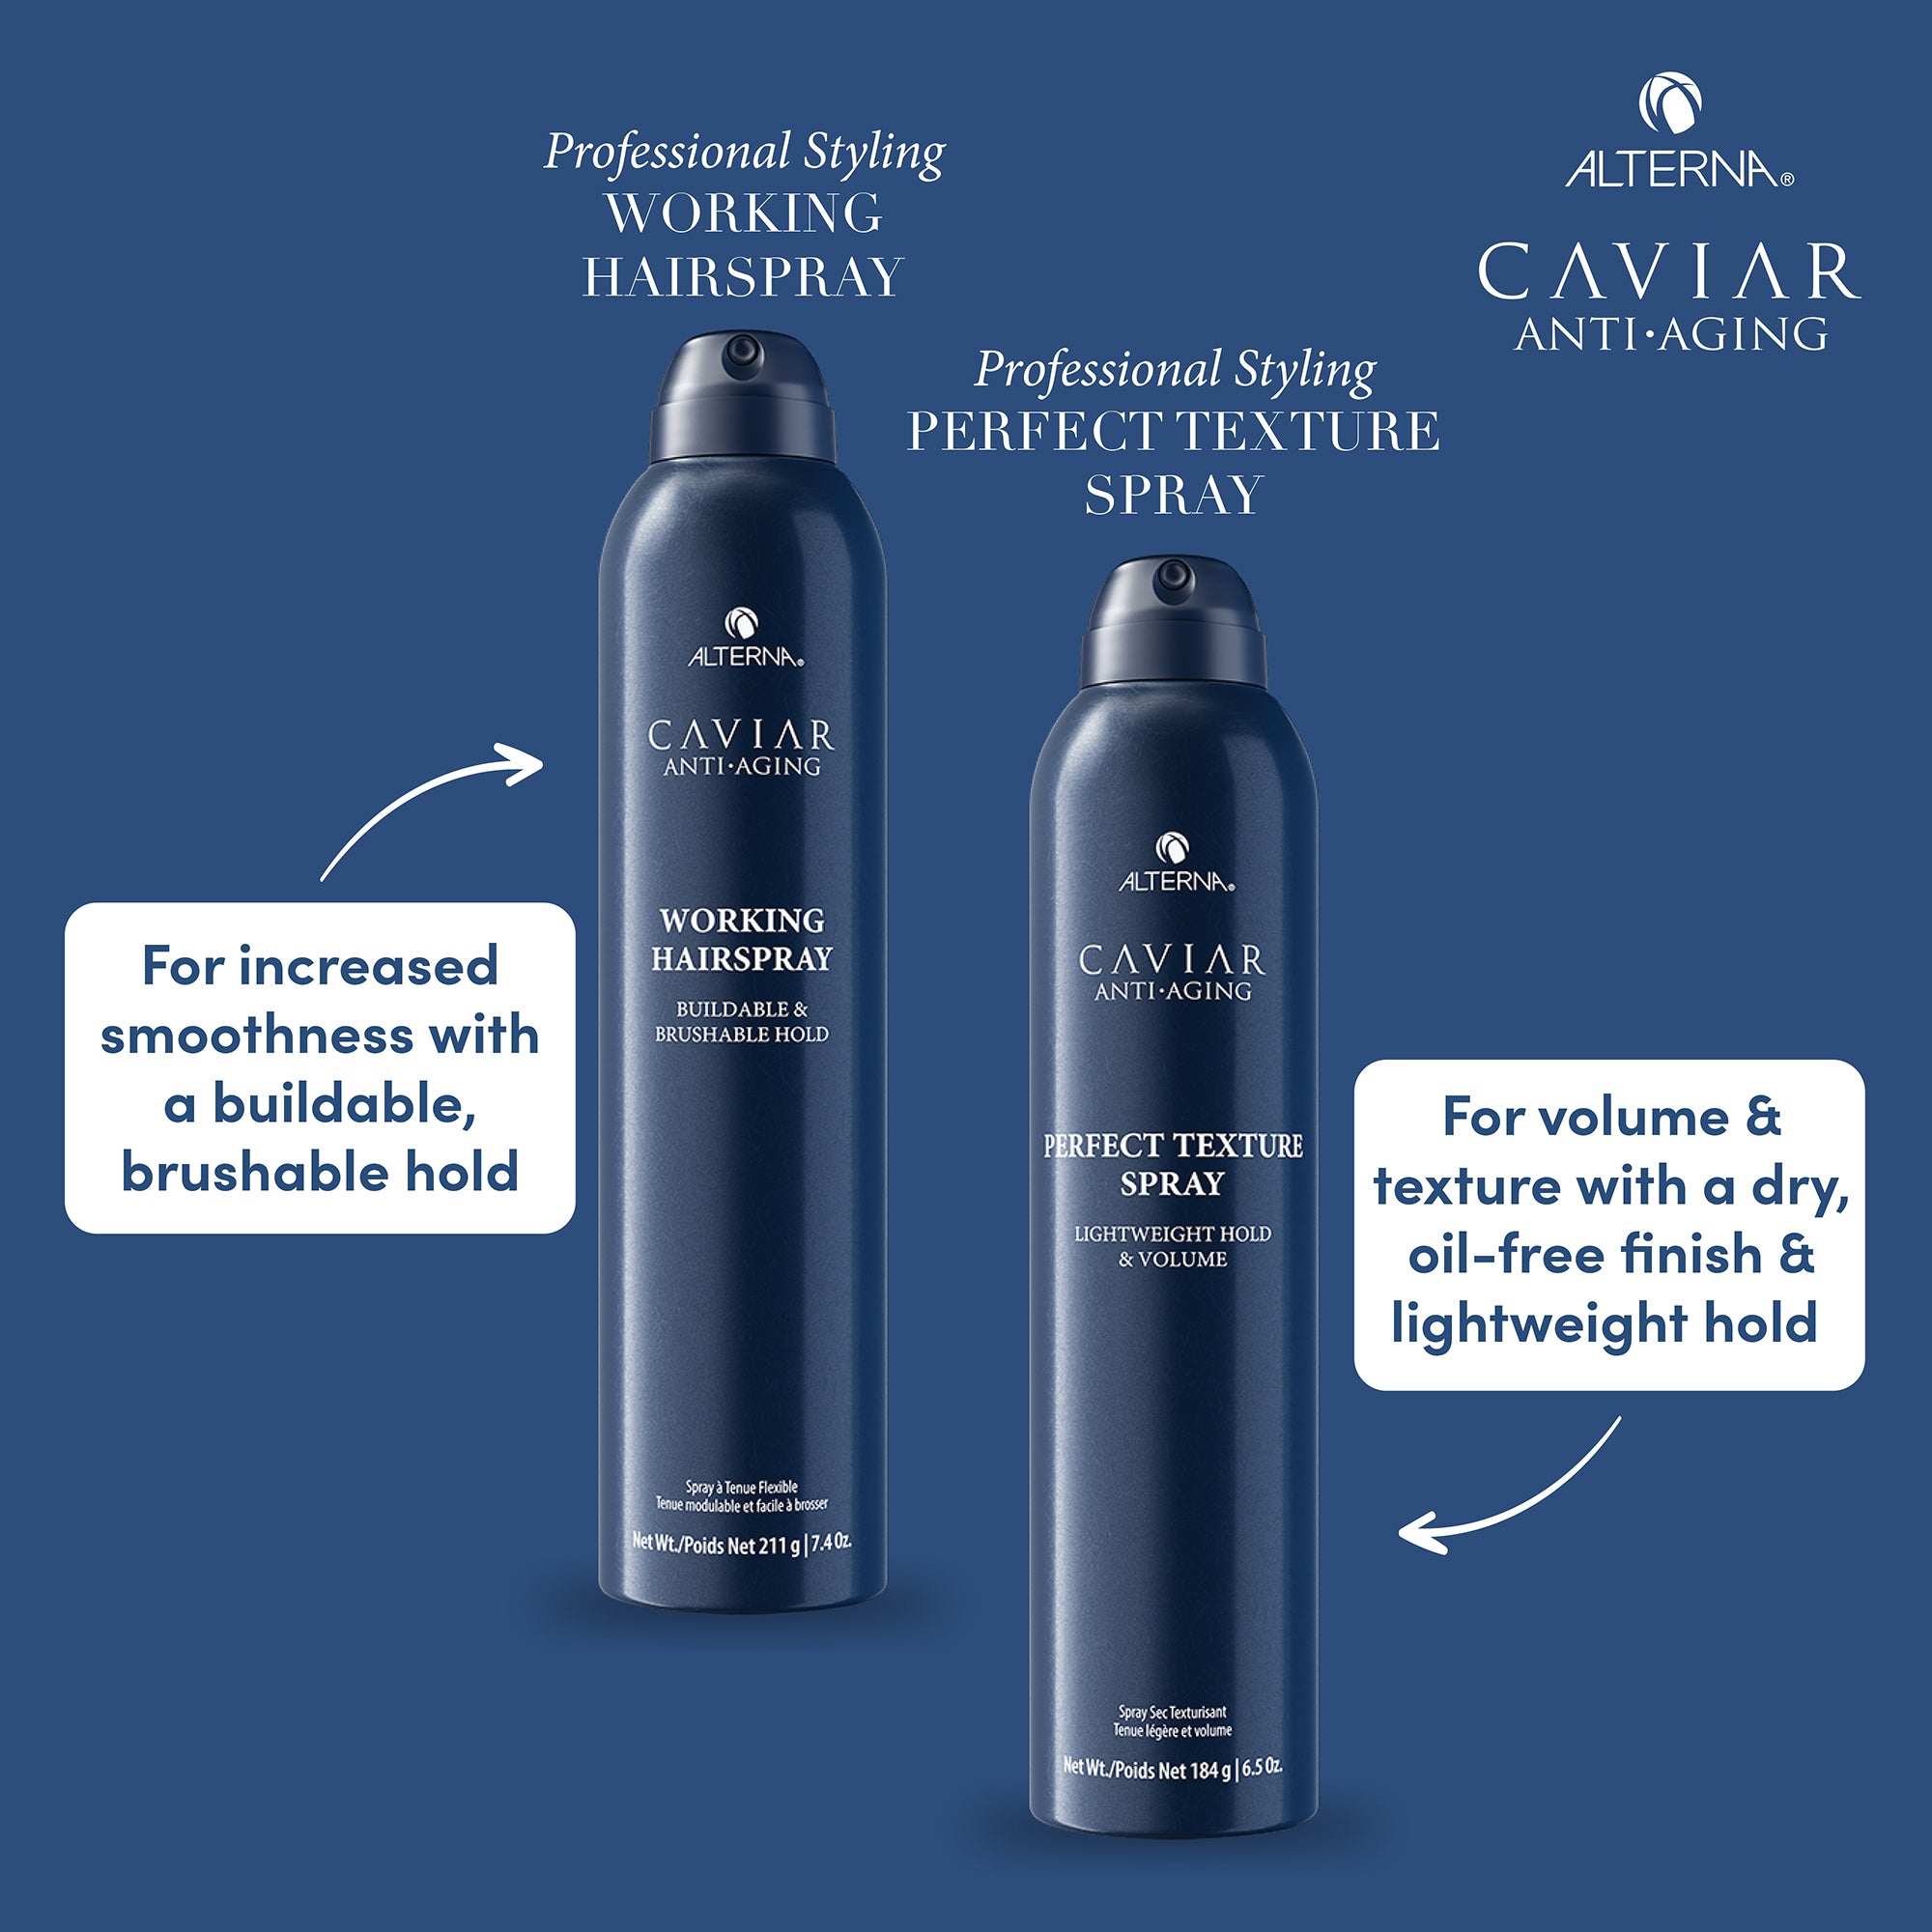 Alterna Caviar Anti-Aging Working Hair Spray / 15.5 oz